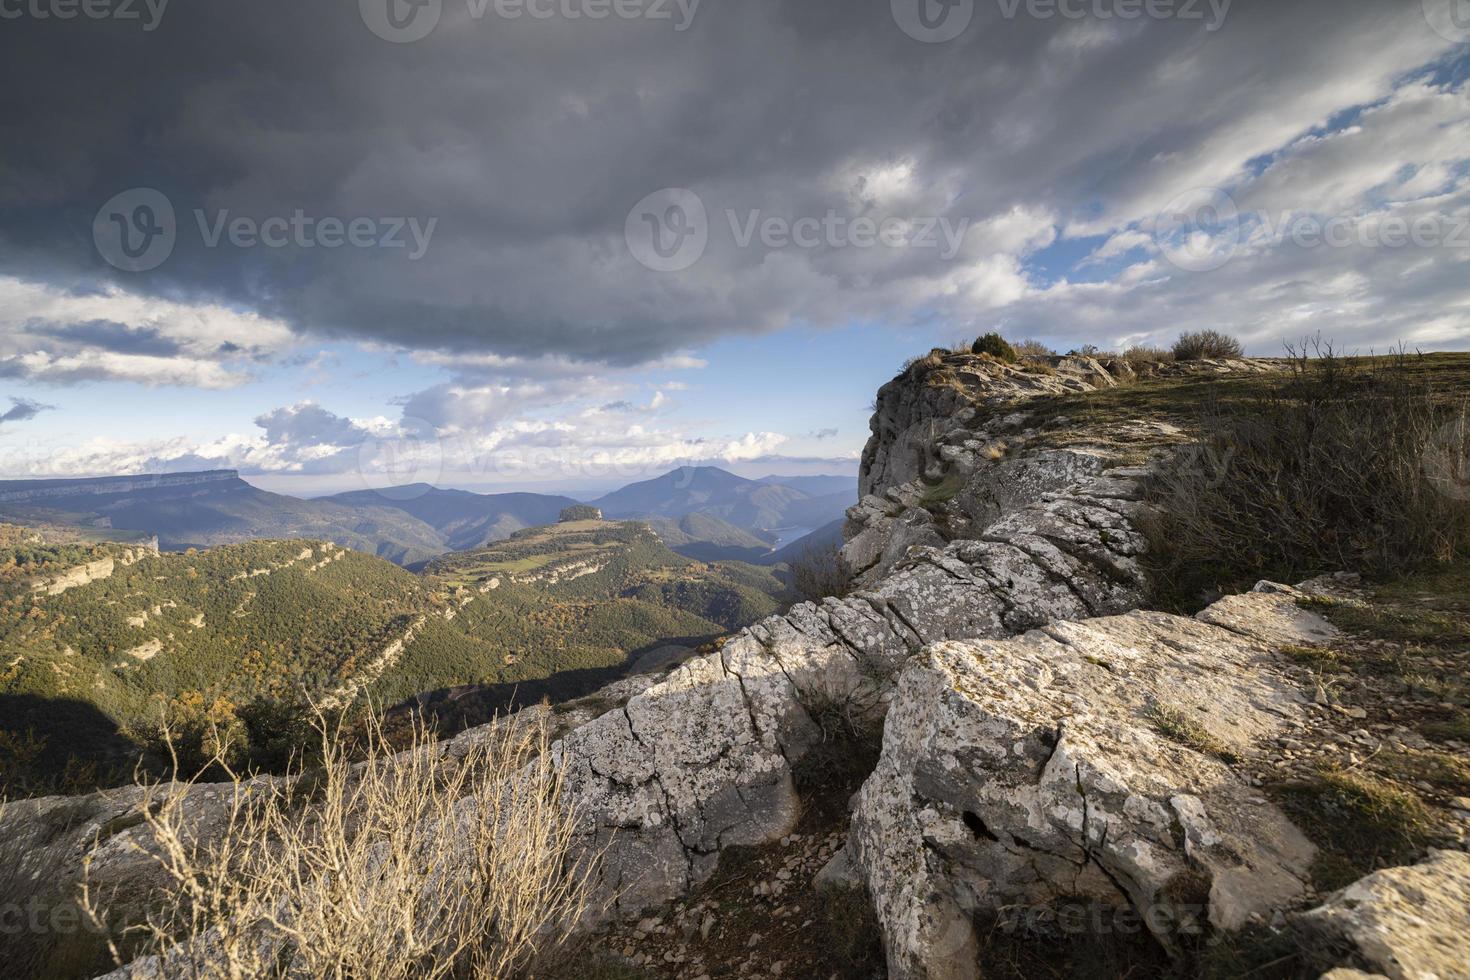 de mooi tavartet berg landschap, Catalonië, Spanje foto